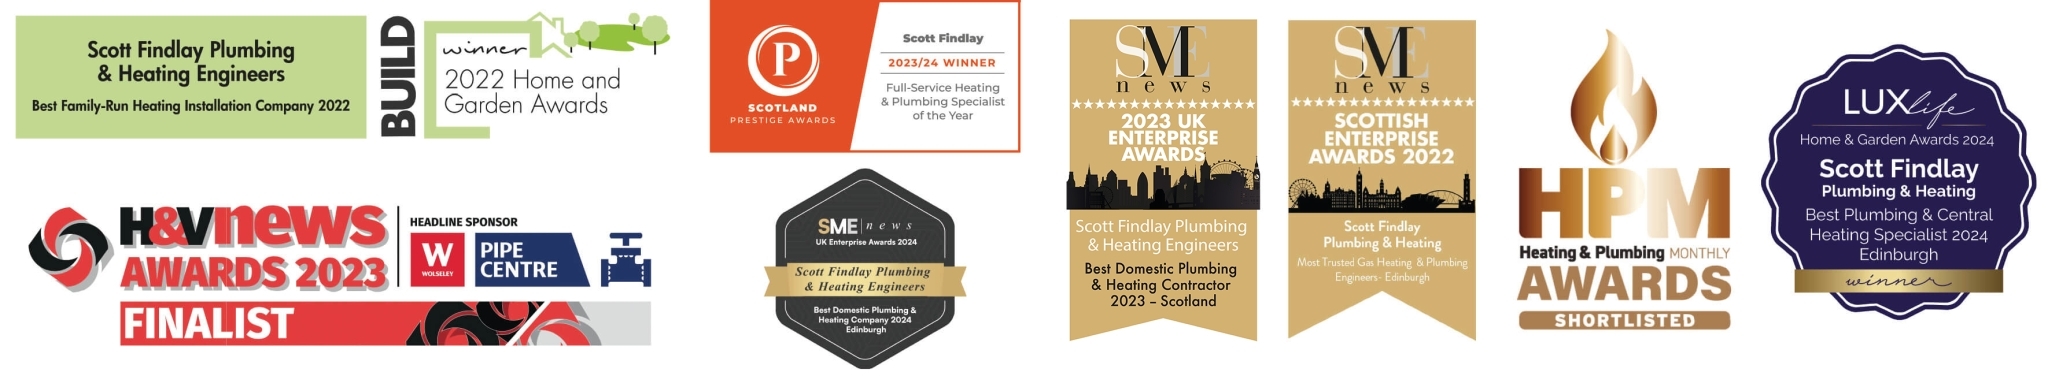 Scott Findlay Awards